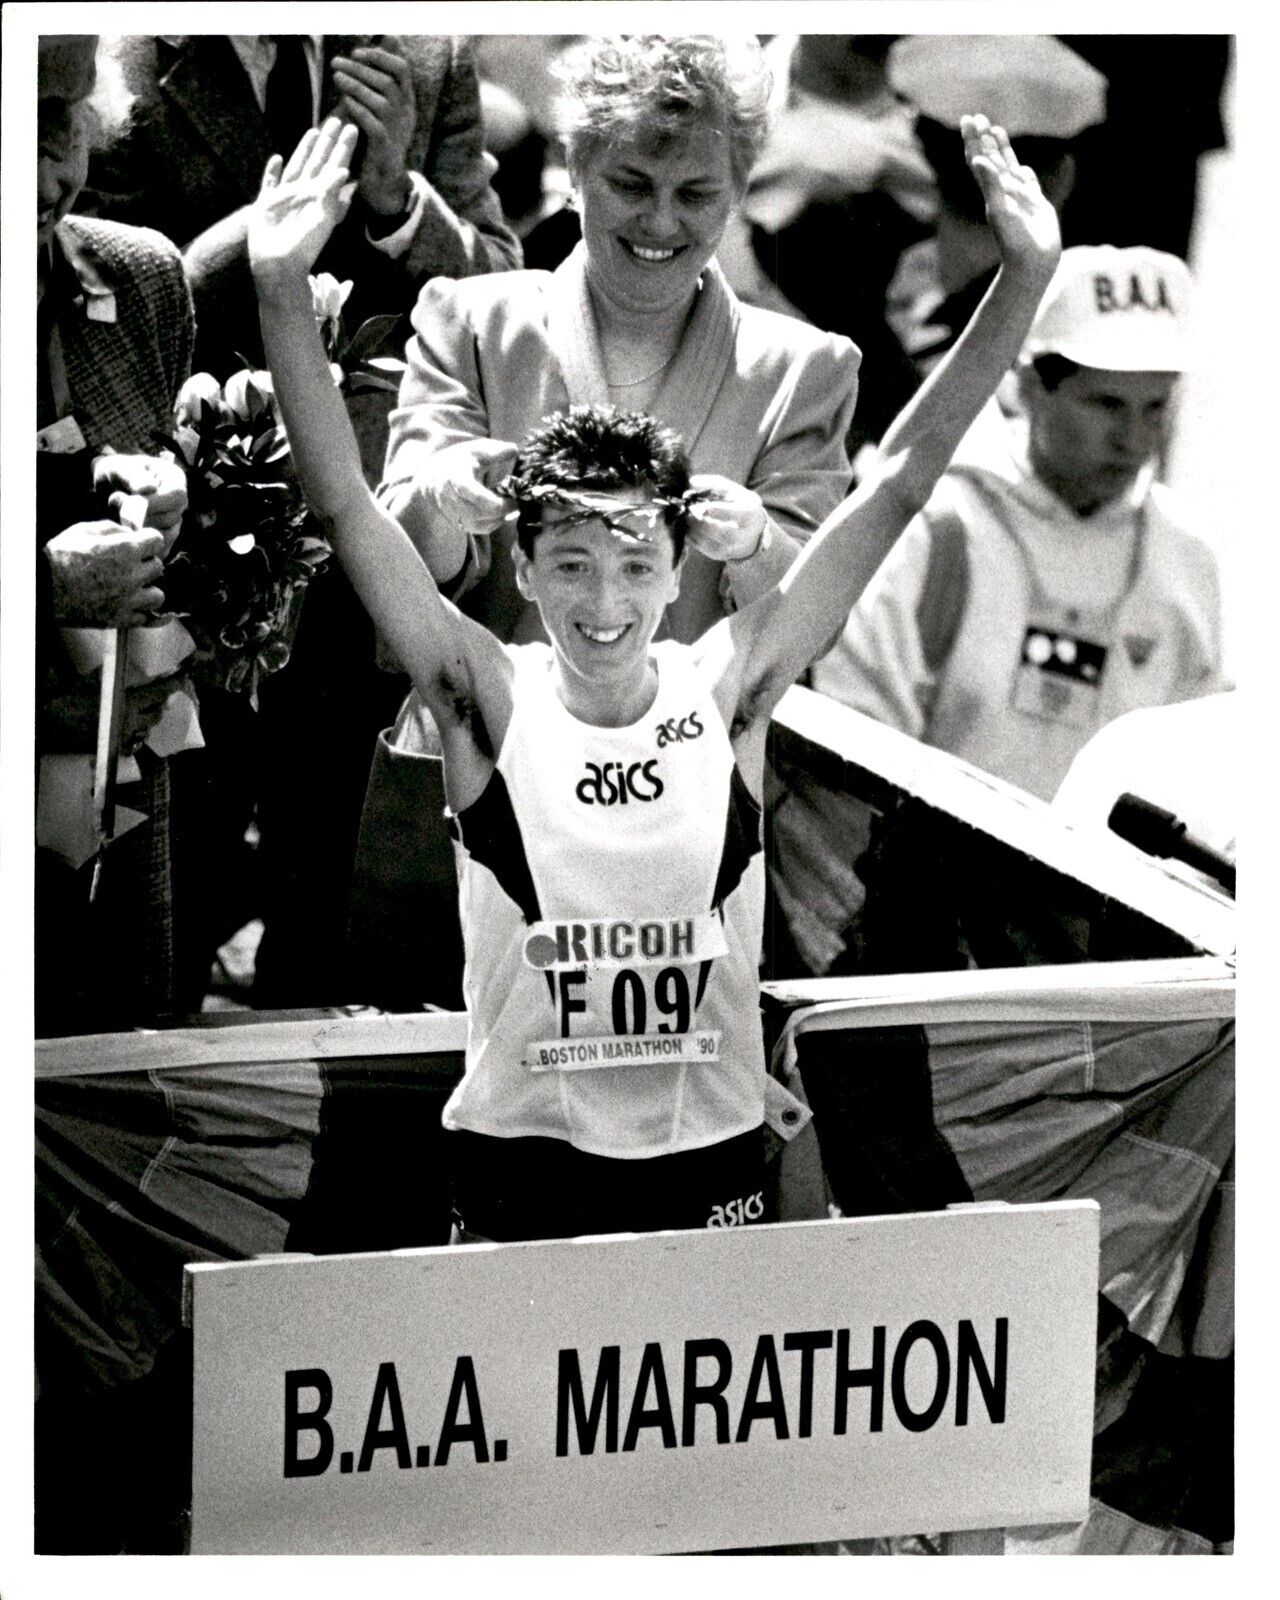 LG996 1990 Orig Photo ROSA MOTA PORTUGUESE OLYMPIC RUNNER WINS BOSTON MARATHON